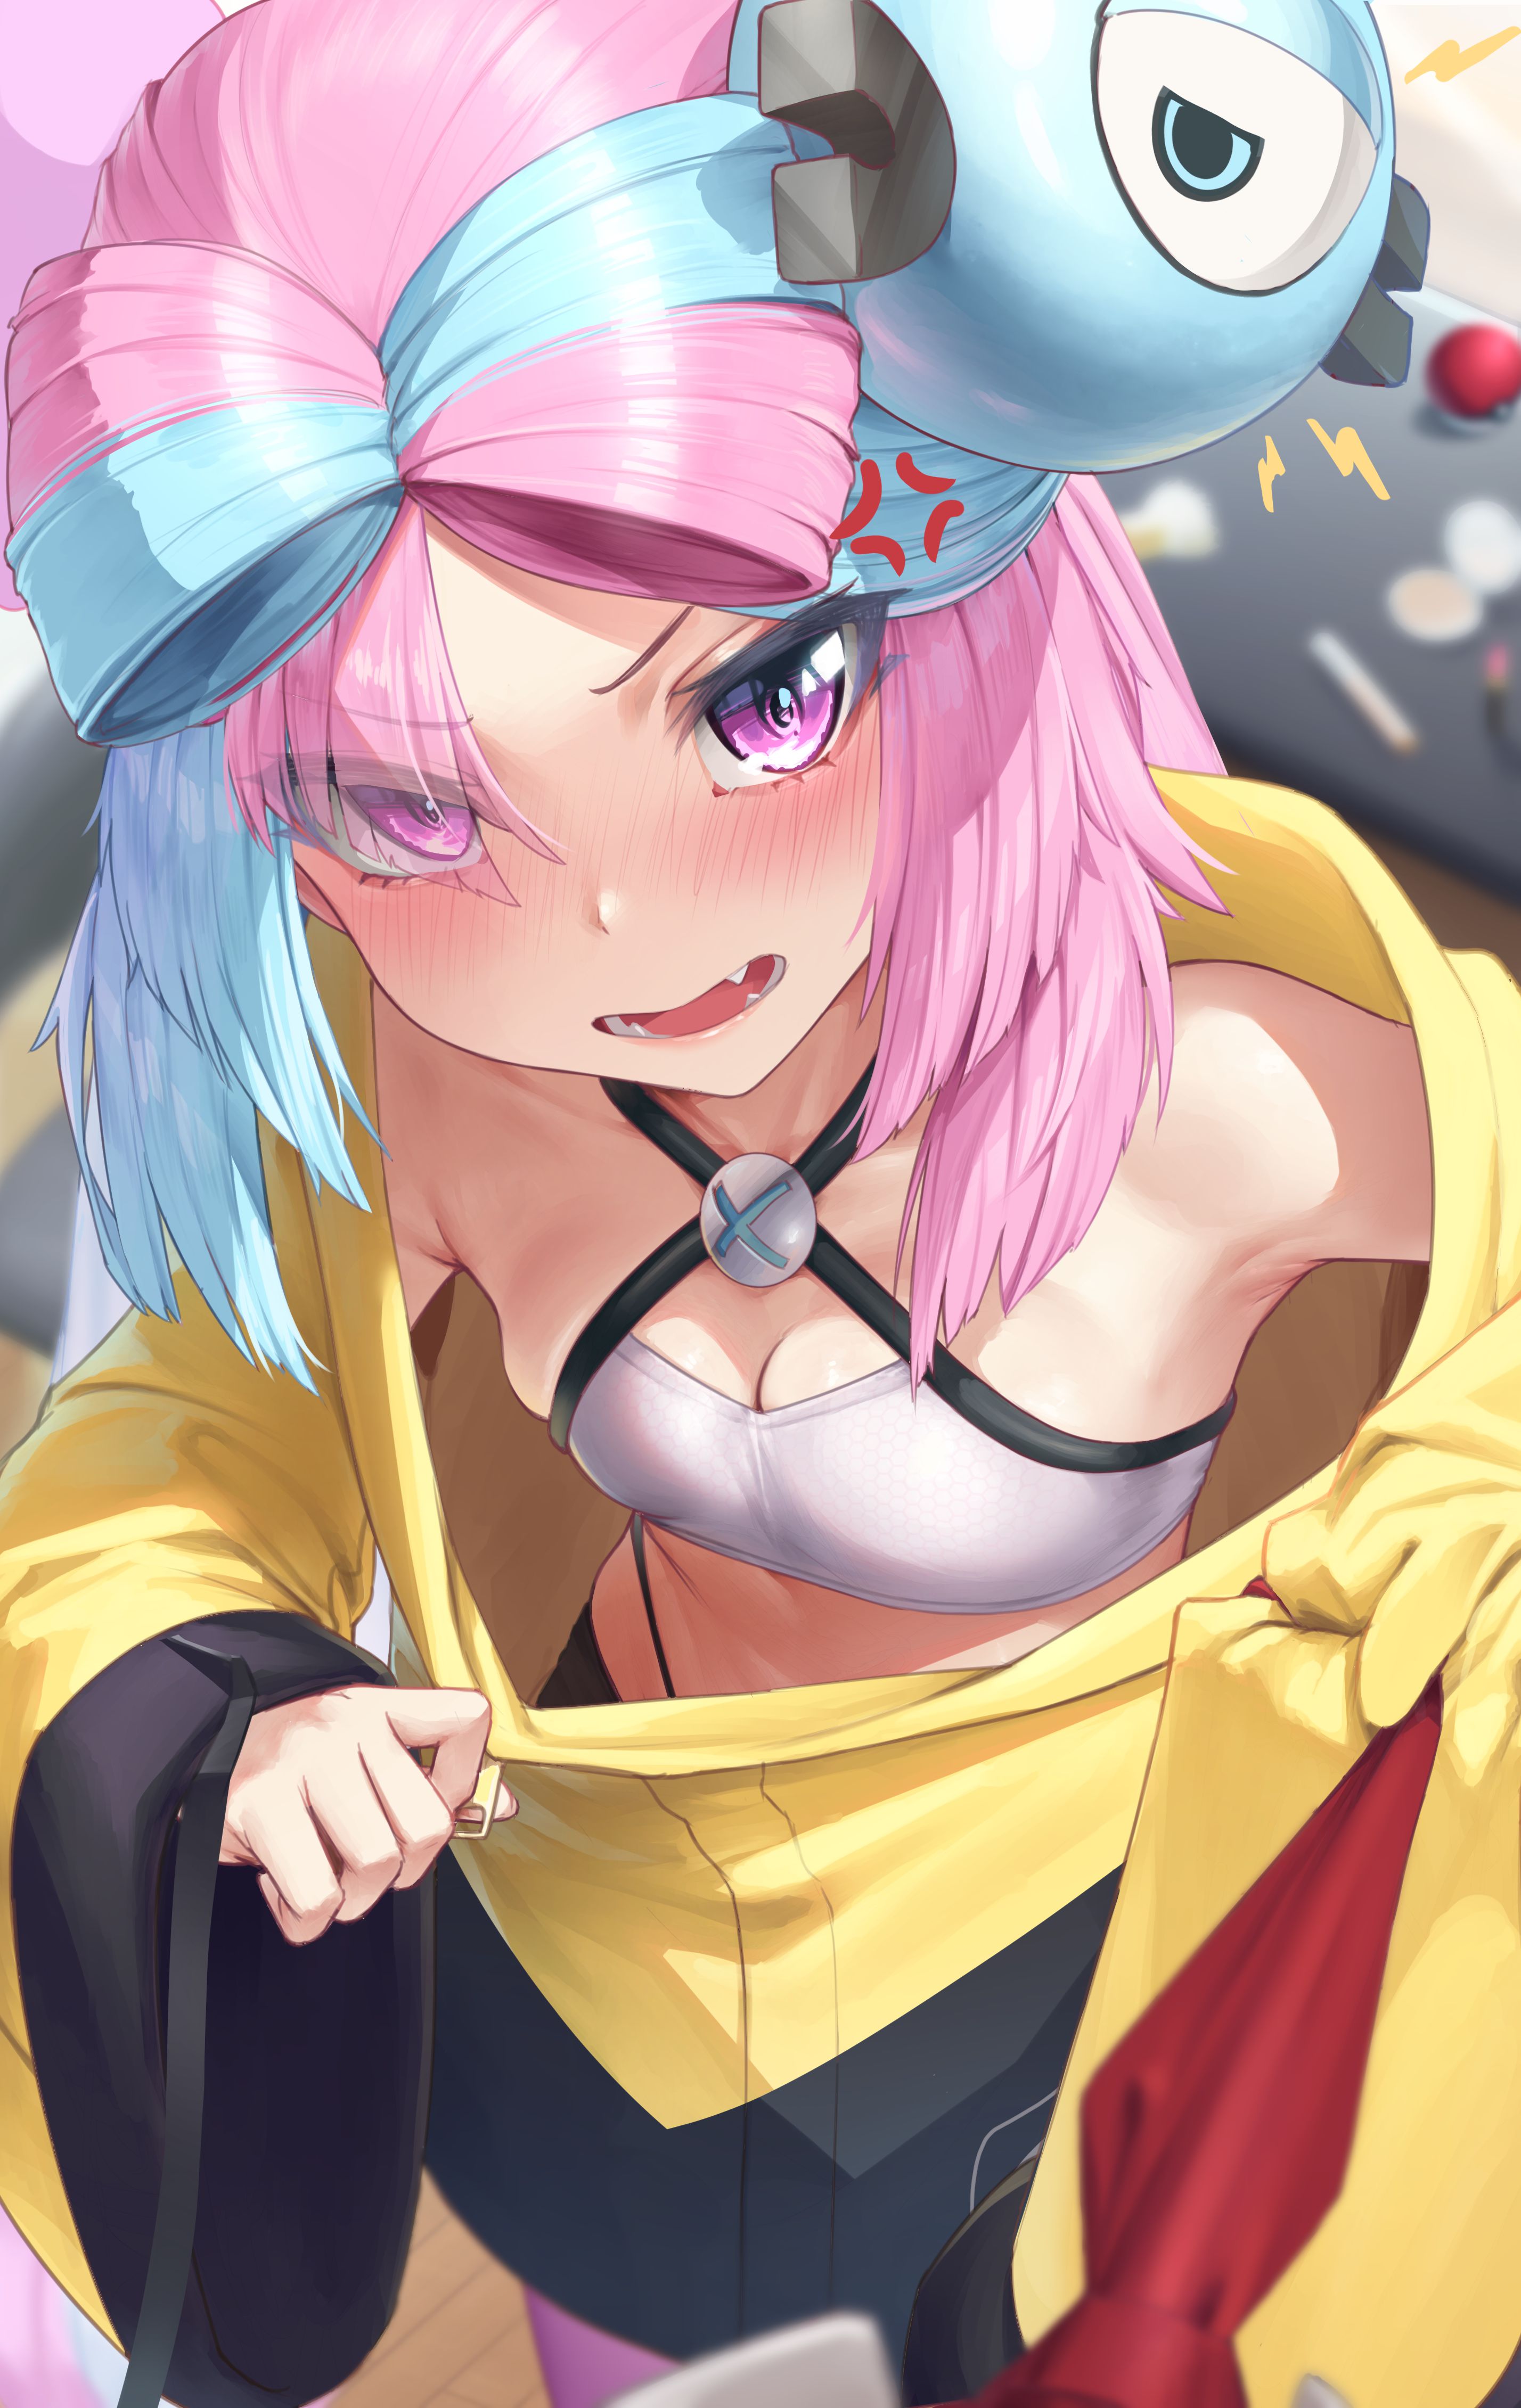 【Nanjamo-chan】Secondary erotic image of Pokémon Violet Scarlet's new gym leader Nanjamo-chan 74